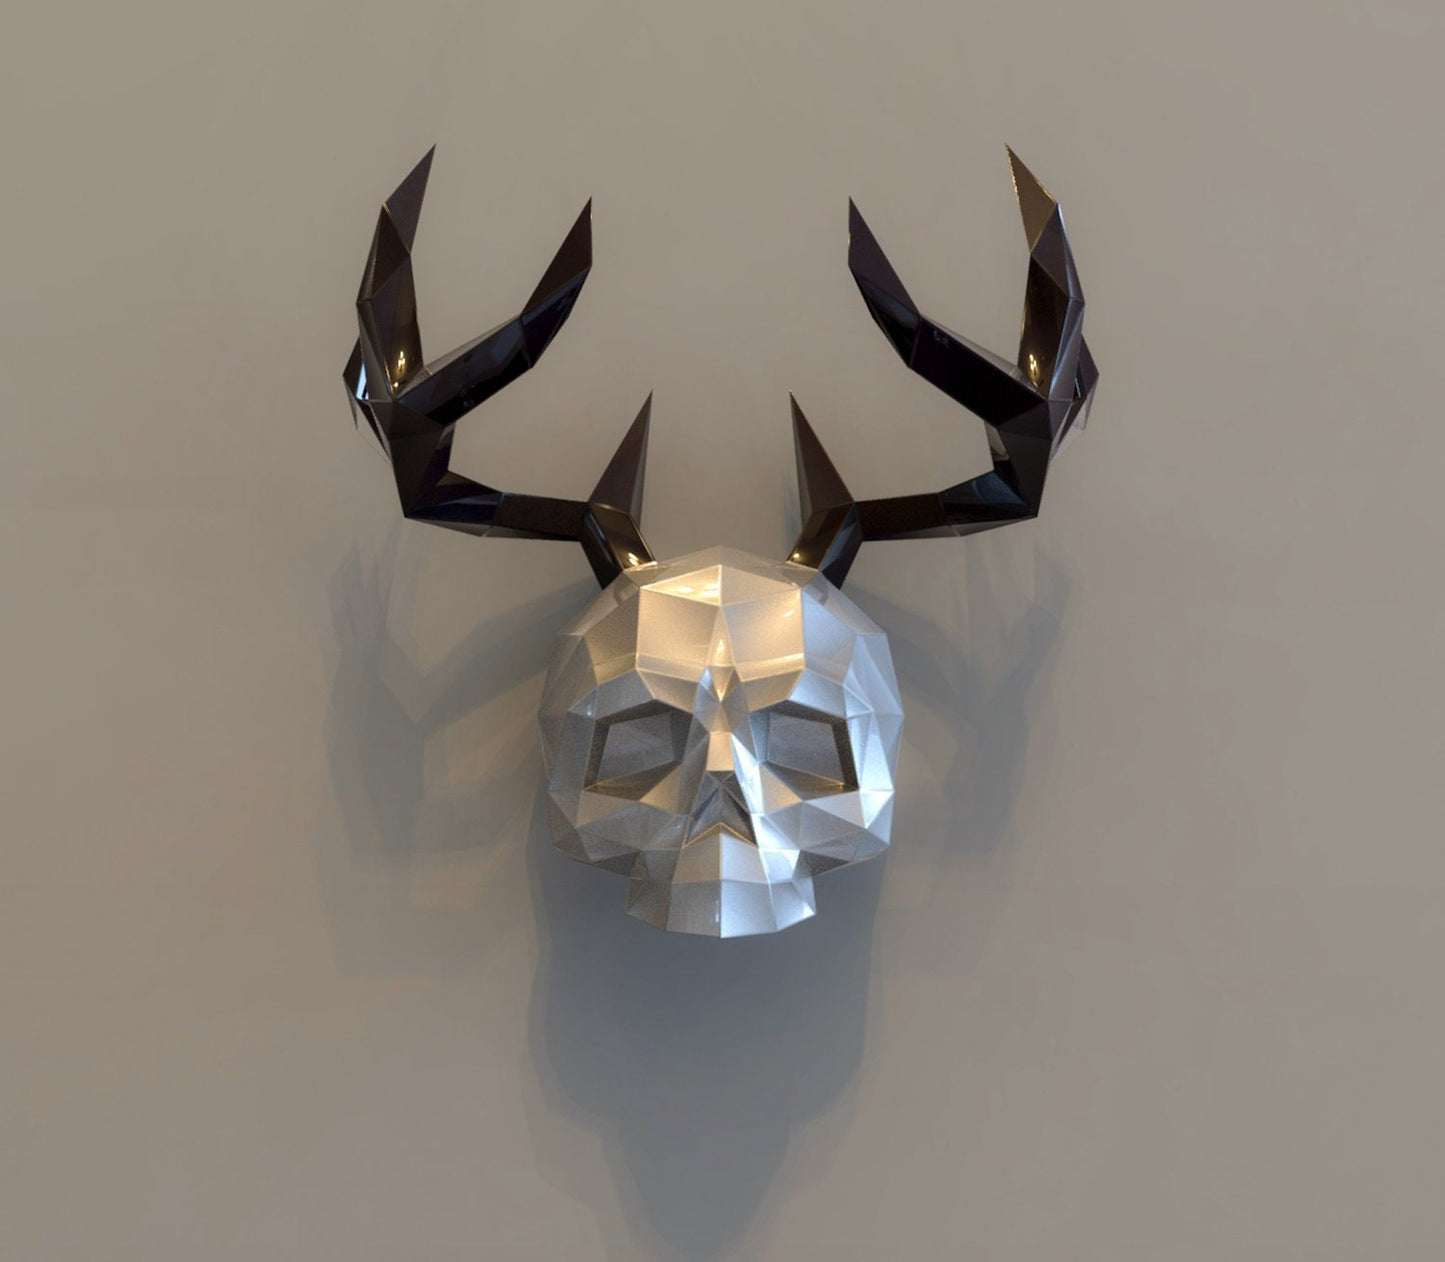 Skull with Horns wall decor